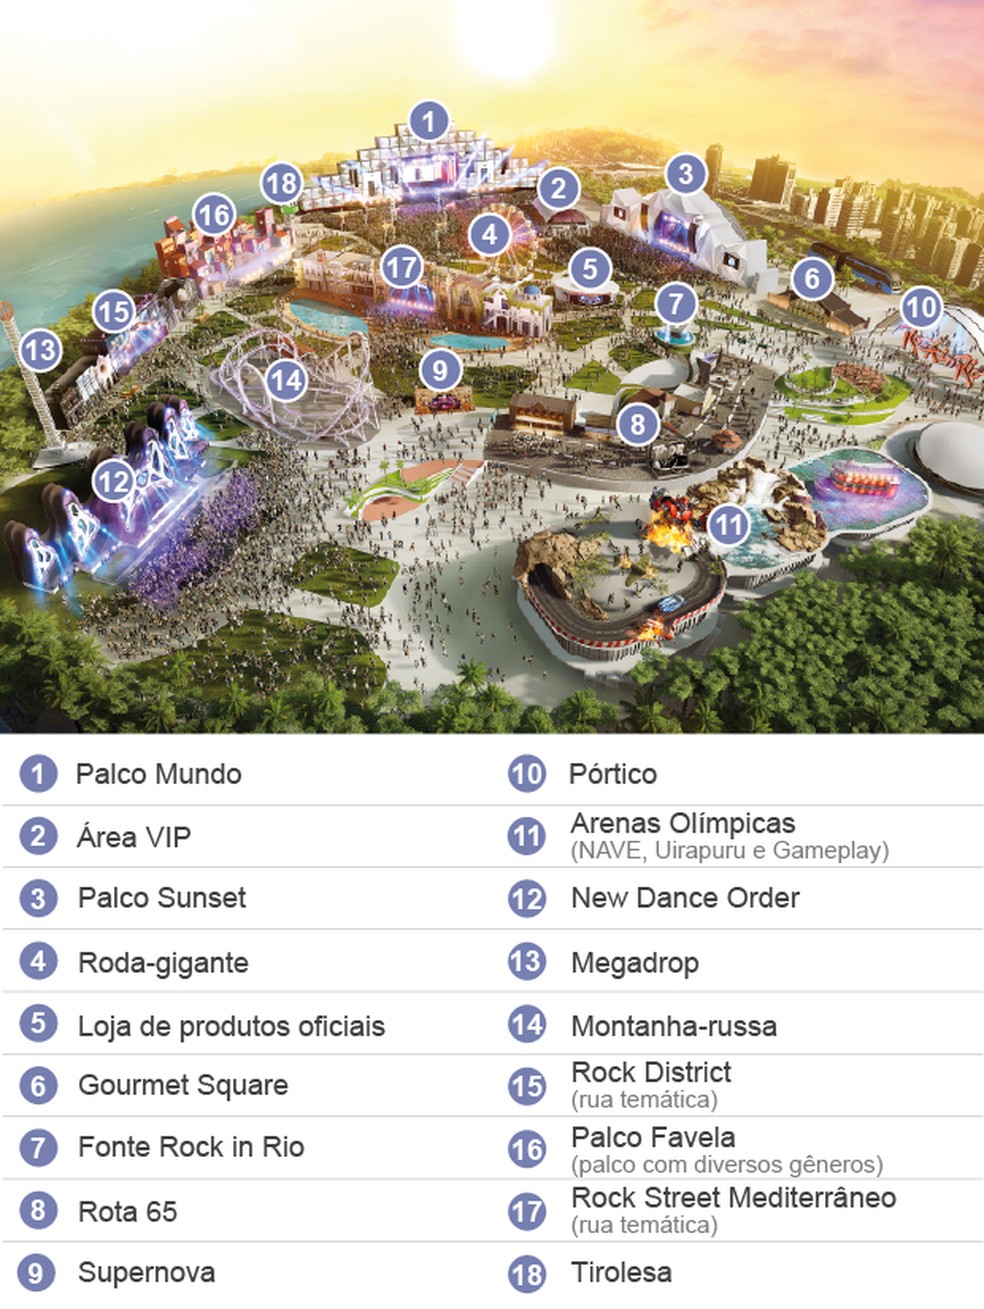 Rock in Rio 2019 divulga mapa e aumenta área do evento